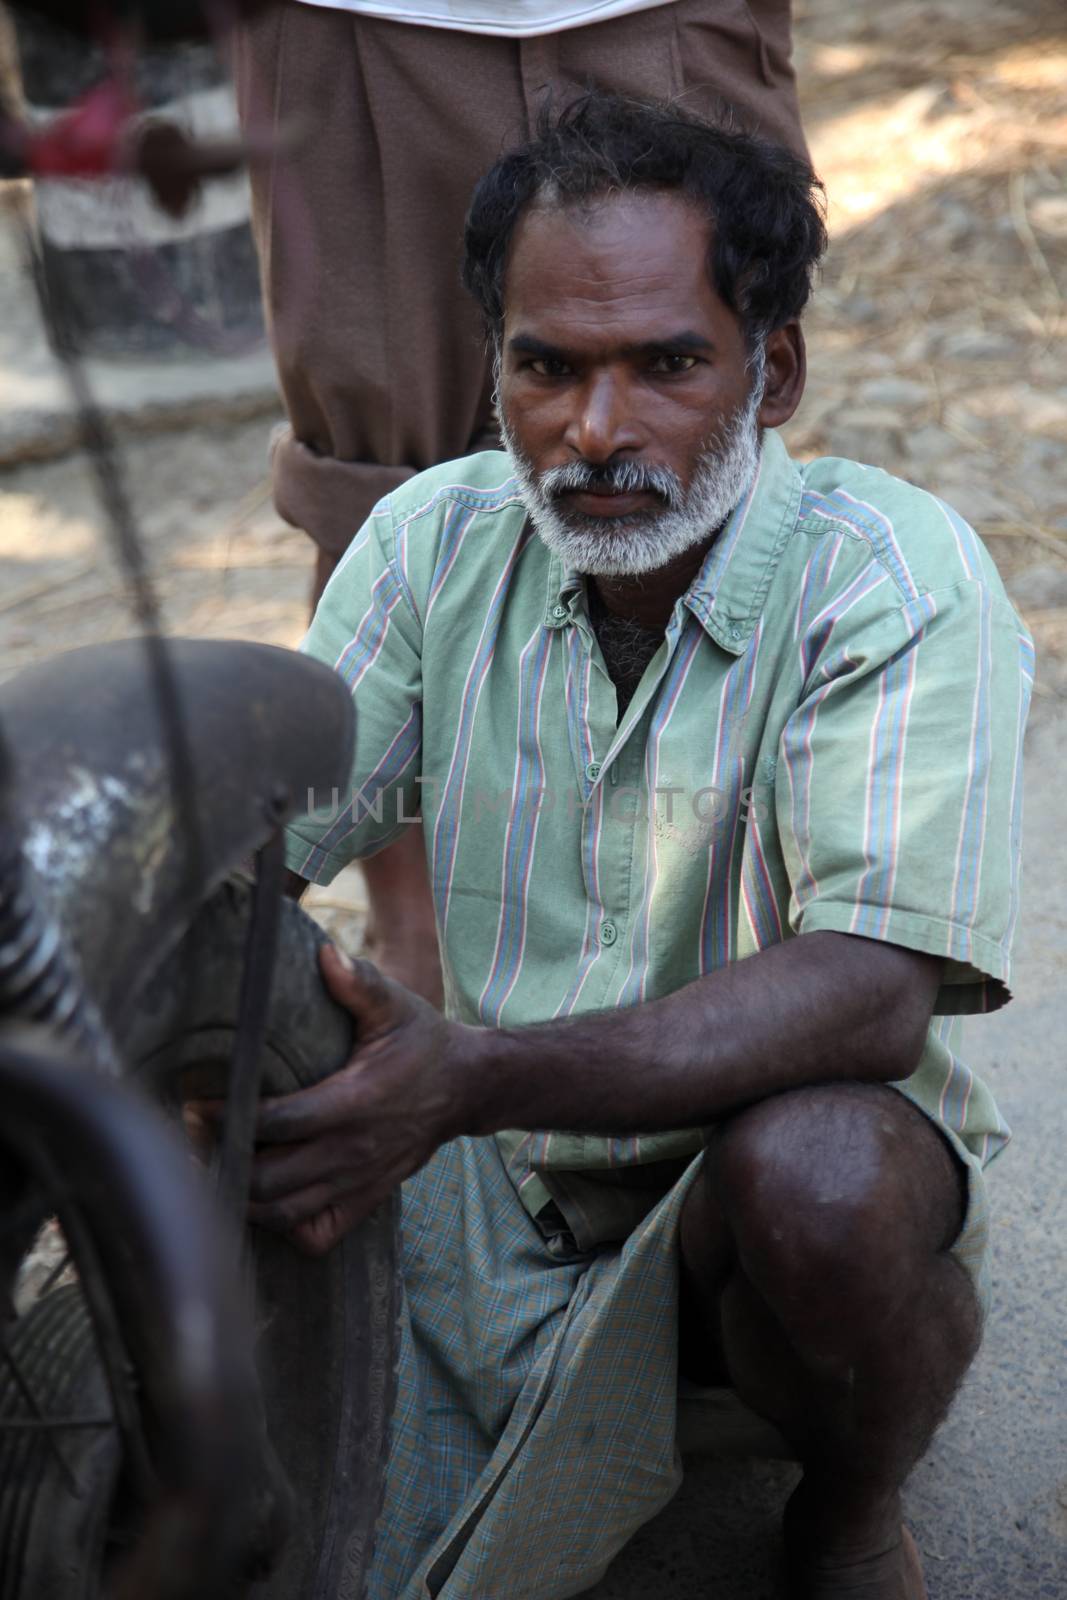 Mechanic repair the motorbike. Bikes is the common individual transport in India.